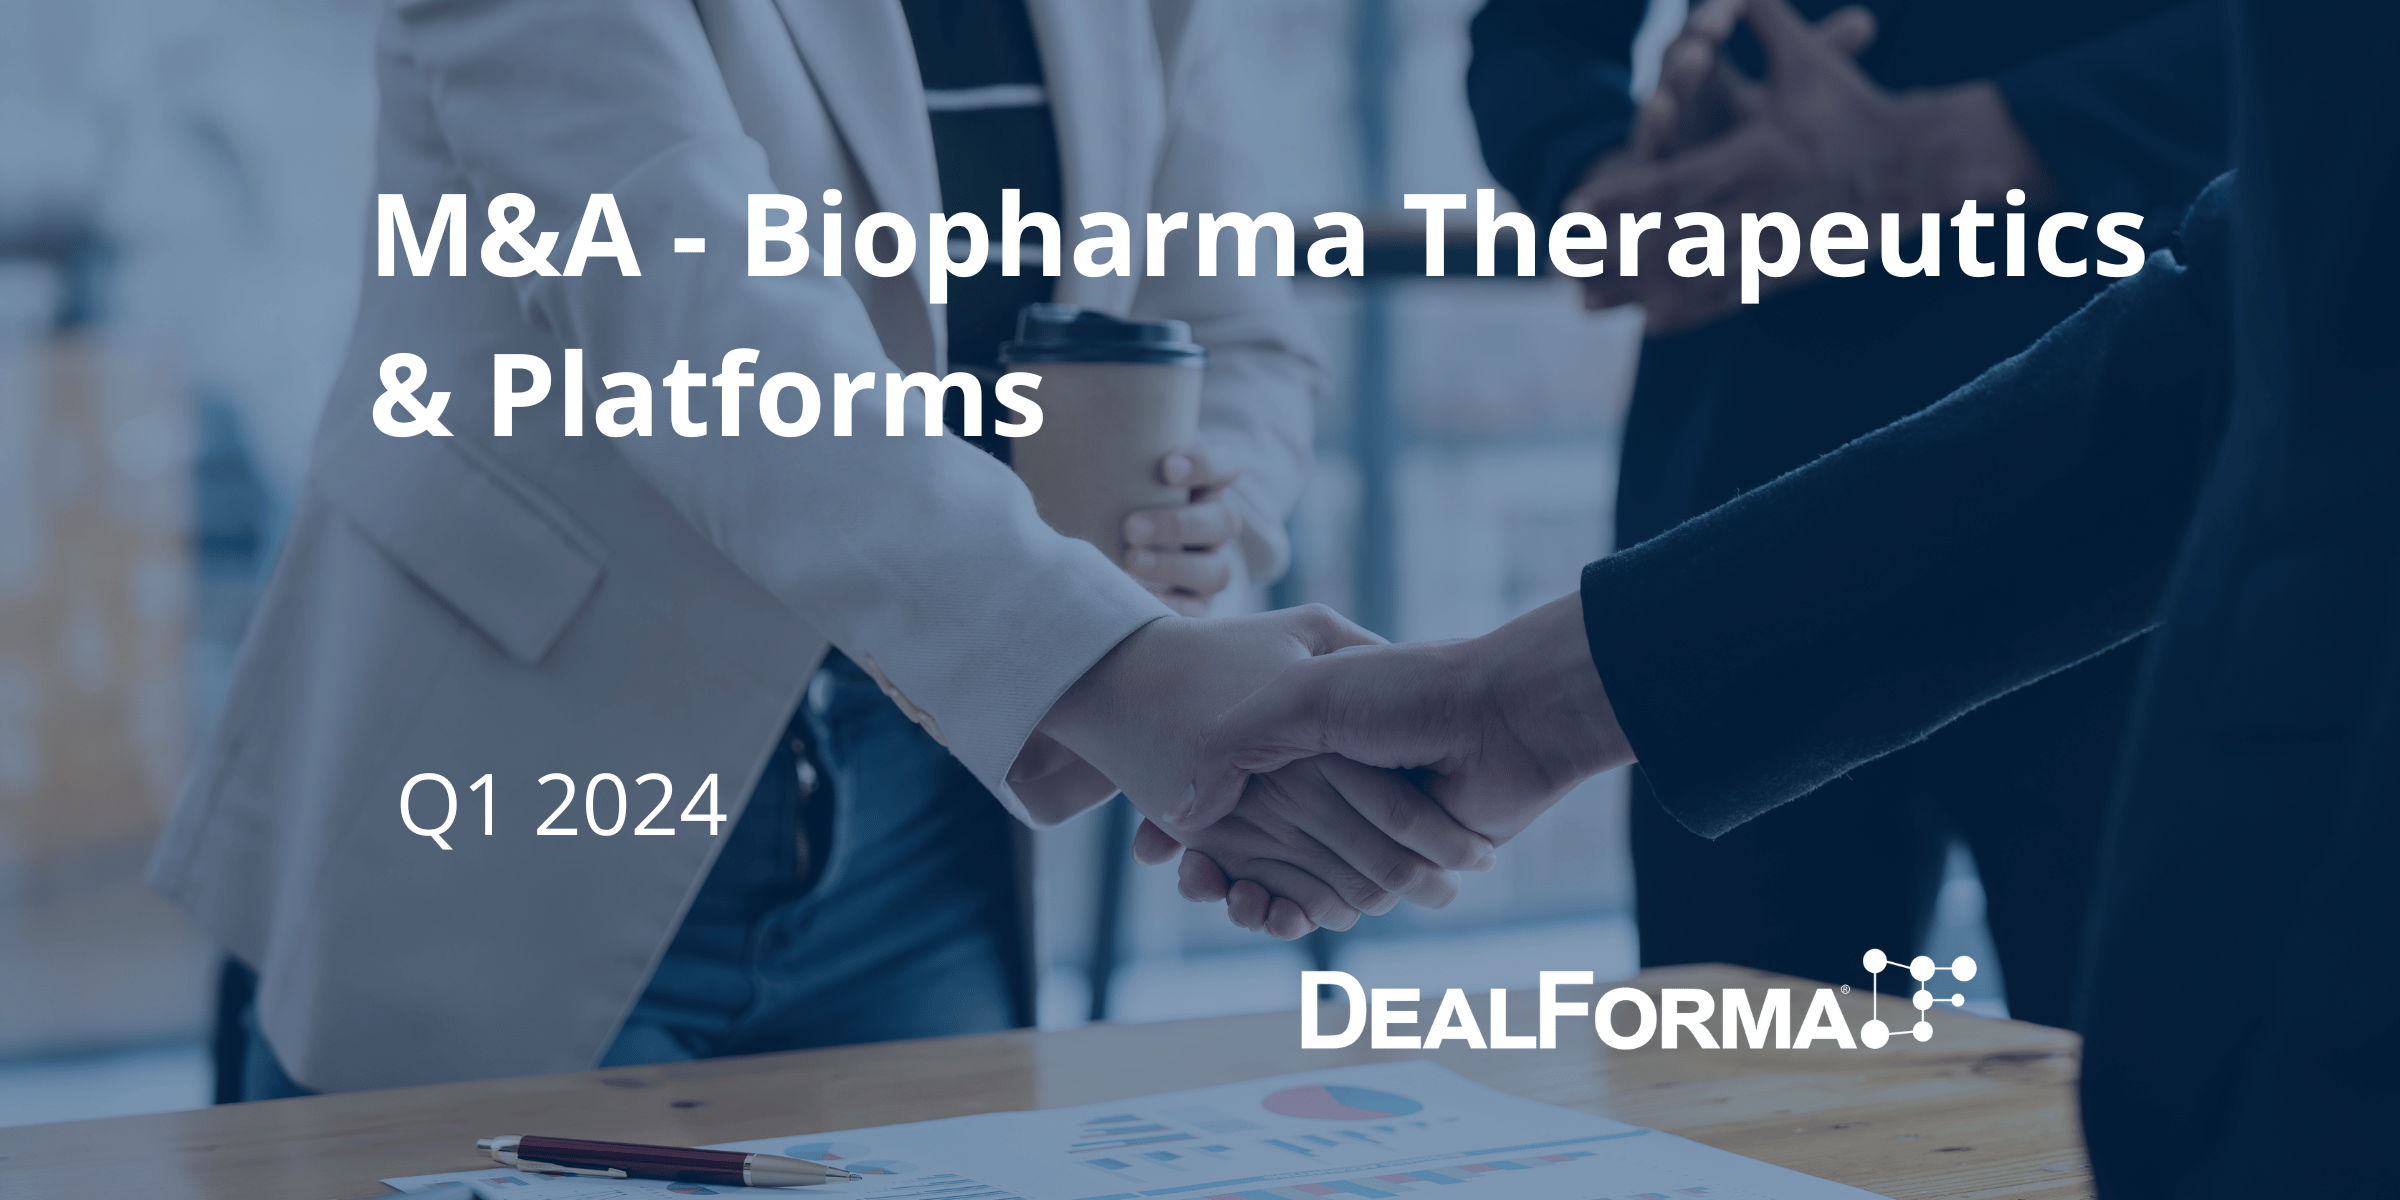 M&A - Biopharma Therapeutics & Platforms - Q1 2024